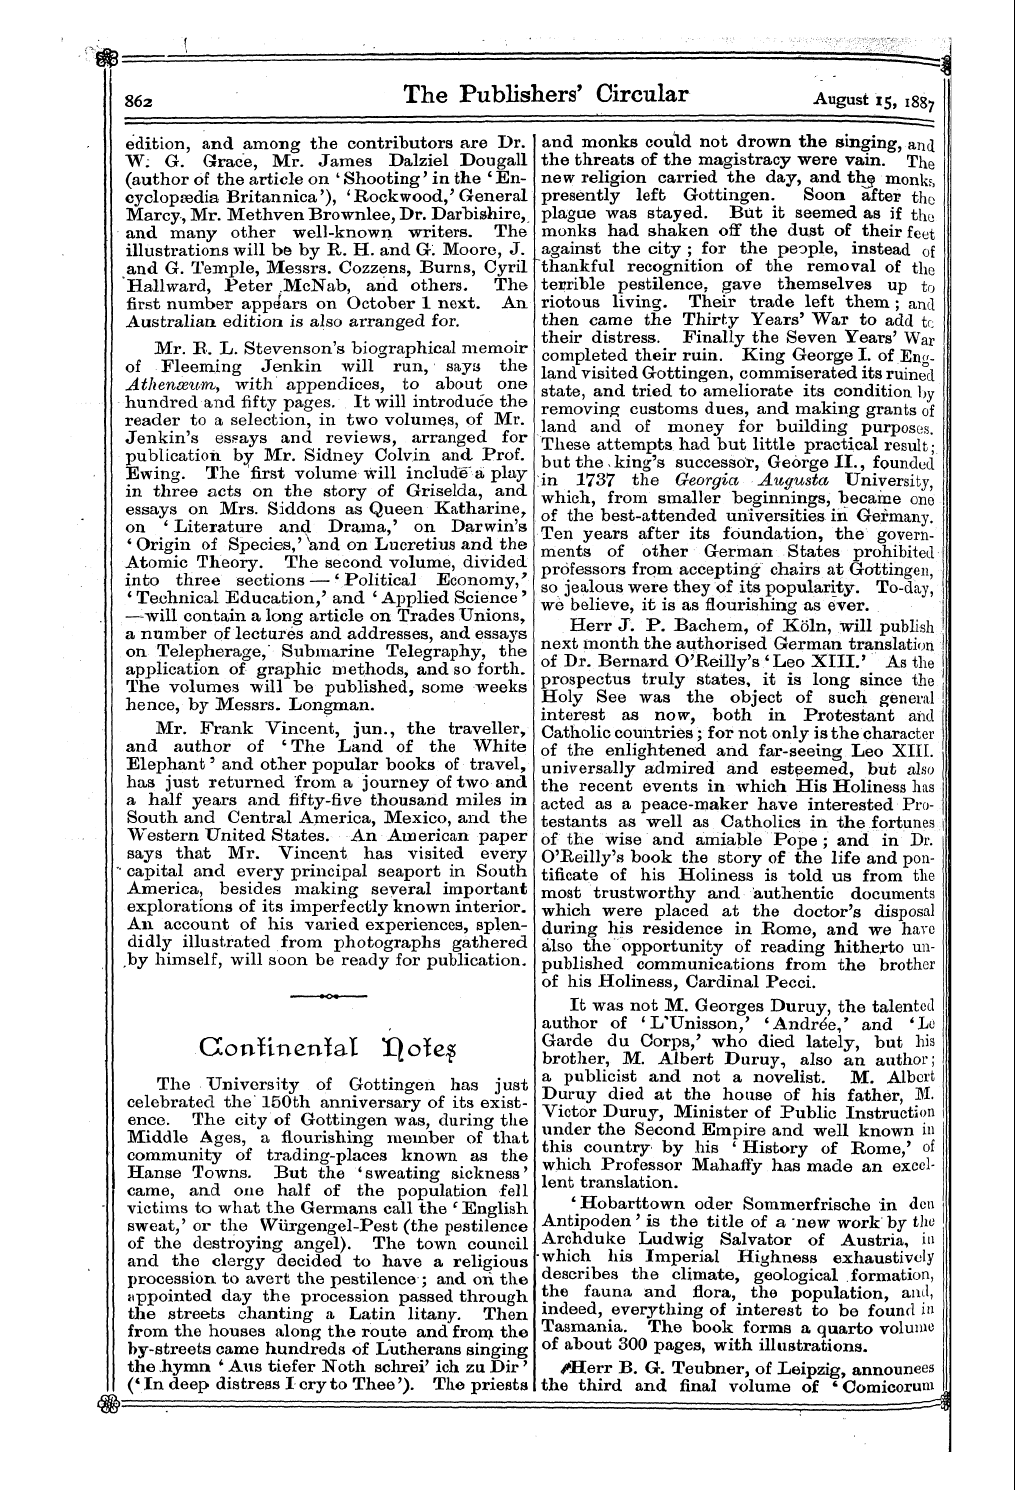 Publishers’ Circular (1880-1890): jS F Y, 1st edition - Hofe£ And !Q Ew^